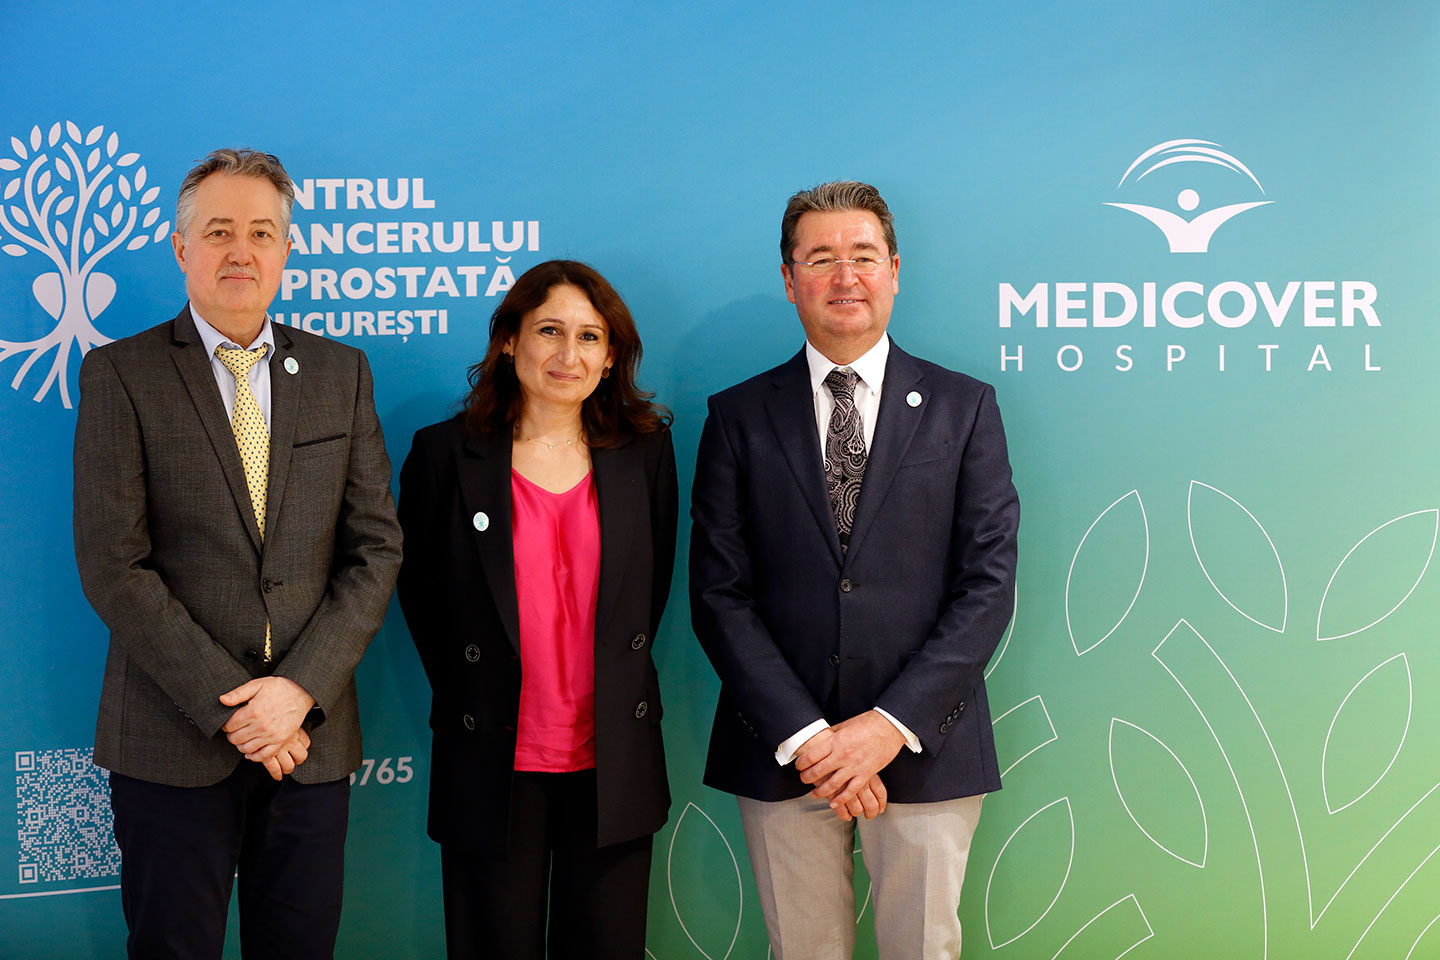 Dr. Mircea-Gabriel Onaca - Medic Specialist Urologie, Dr. Florinela Cirstina - Director General Medicover Romania, Dr. Gheorghe Nita - Medic Primar Urologie